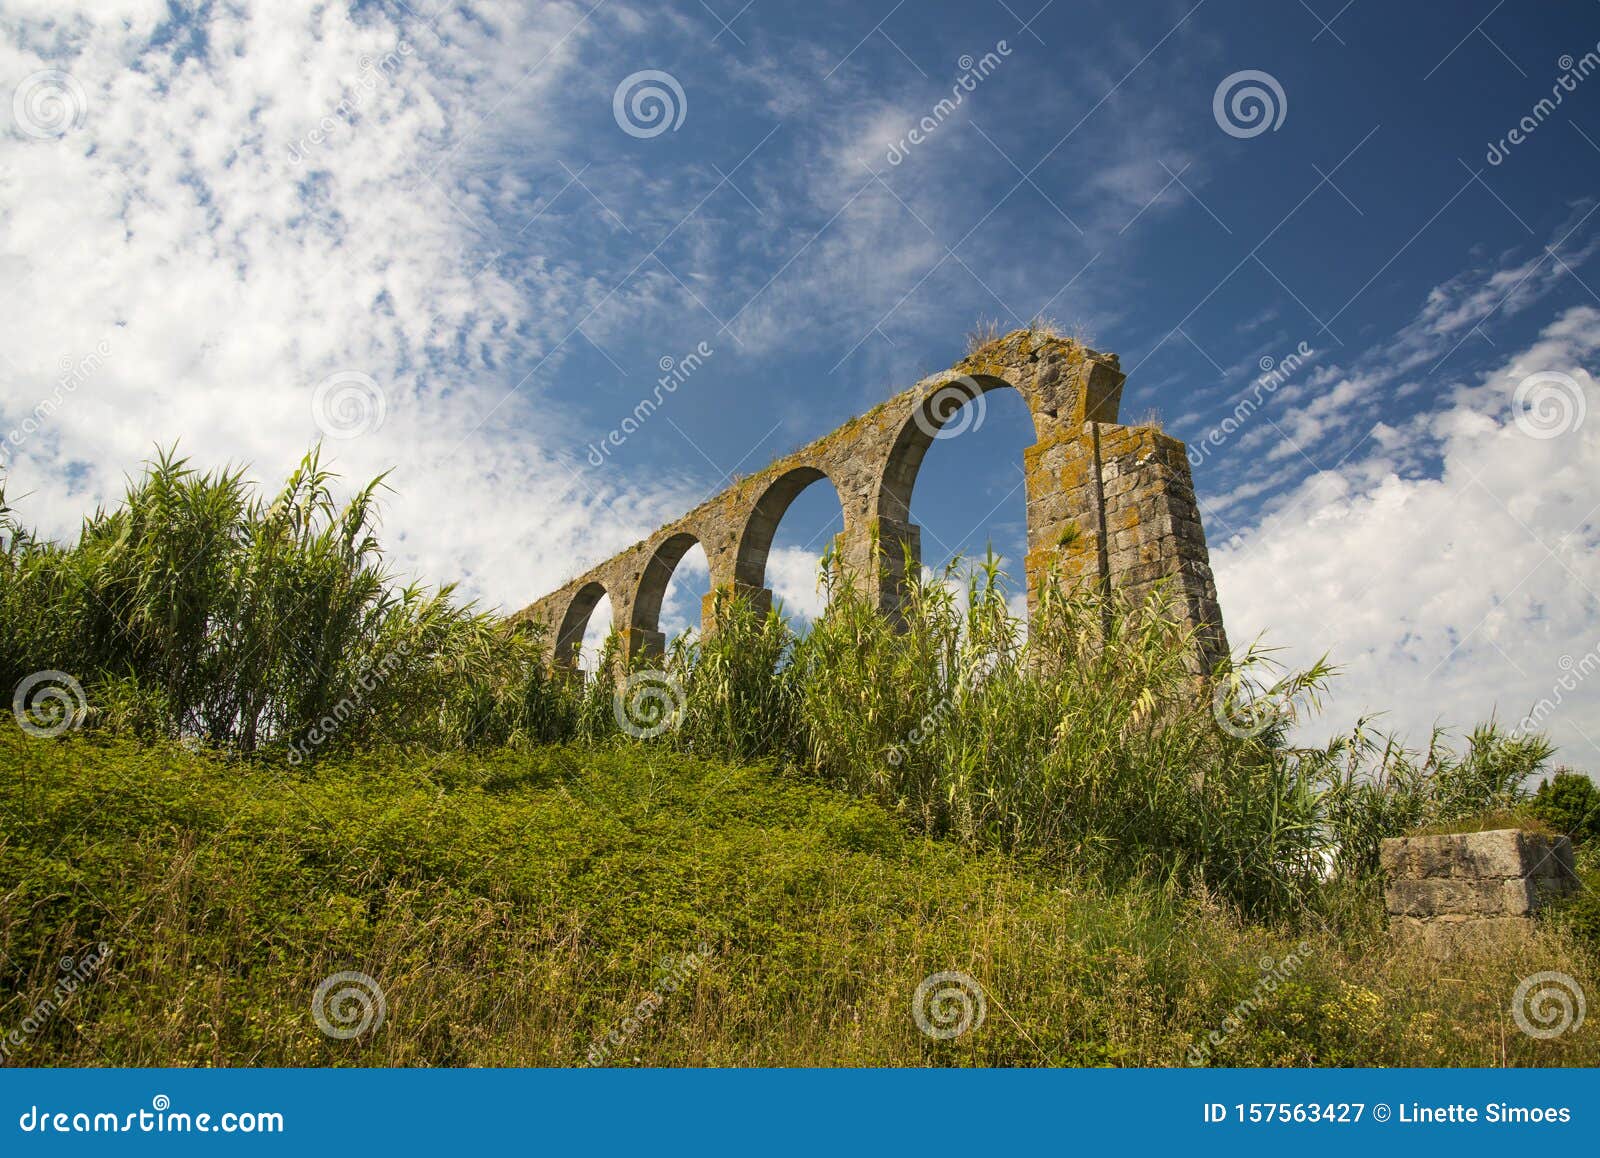 ancient roman aqueduct engineering in vila do conde, north portugal